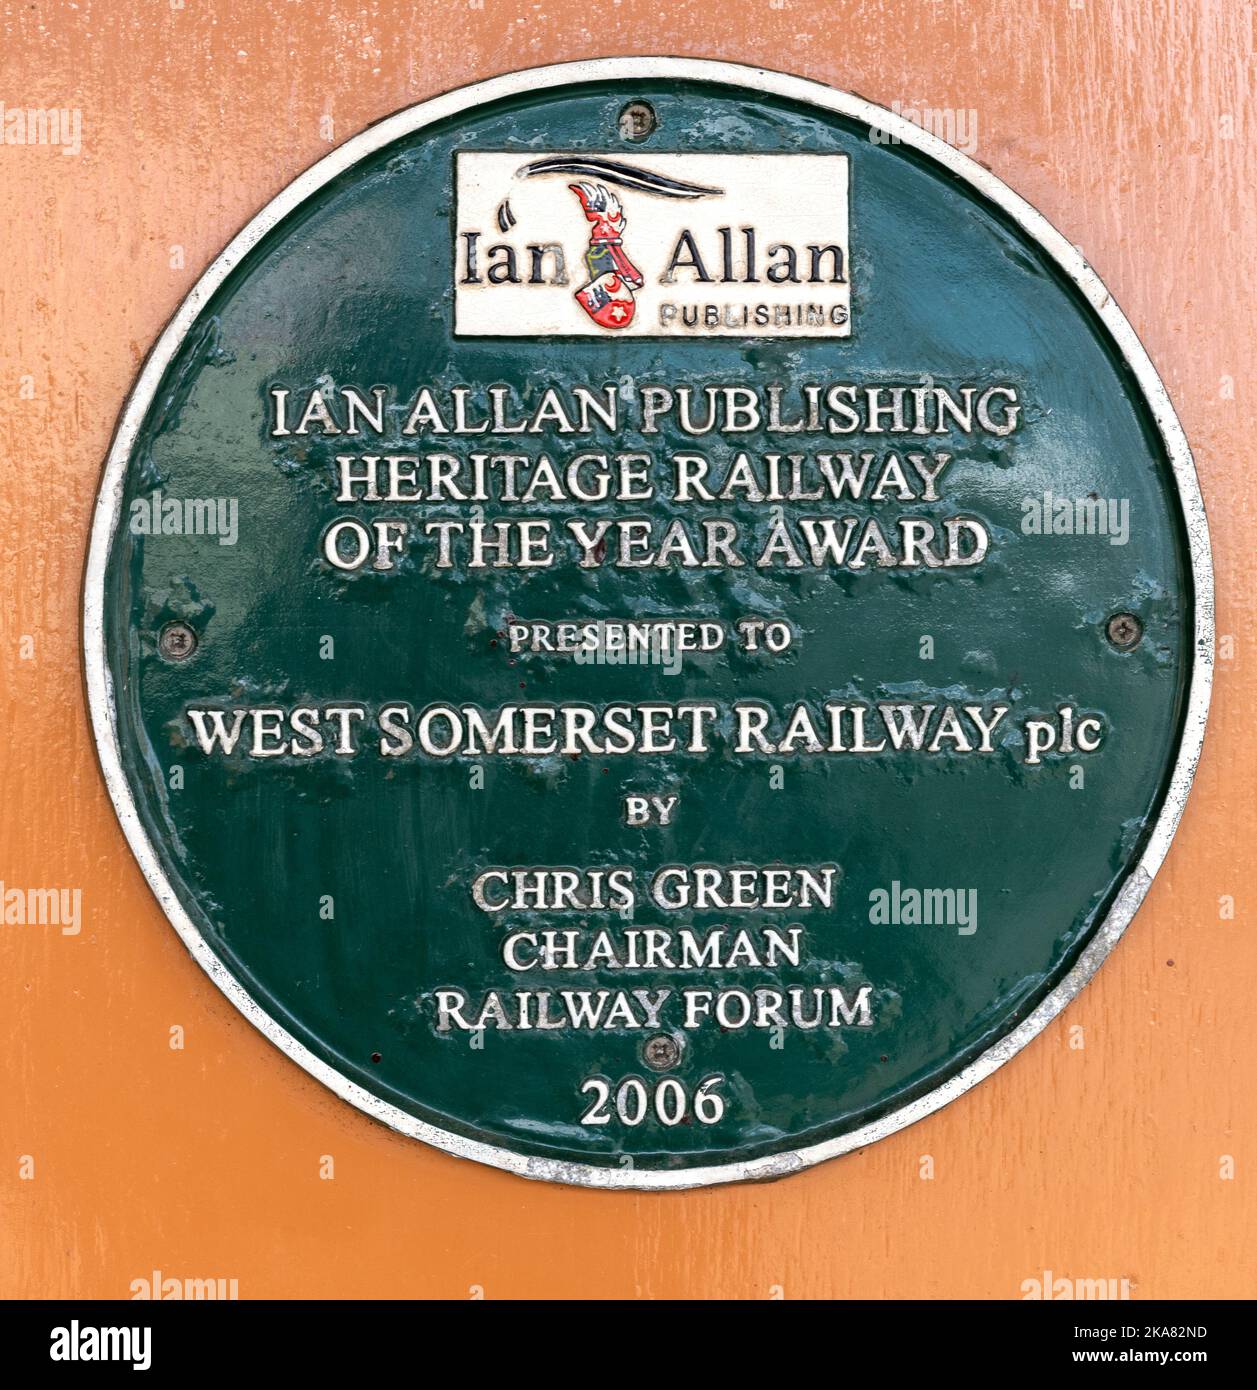 Ian Allan Green plaque at Minehead Railway station, West Somerset Preservation Railway, Minehead, Somerset, England, UK Stock Photo